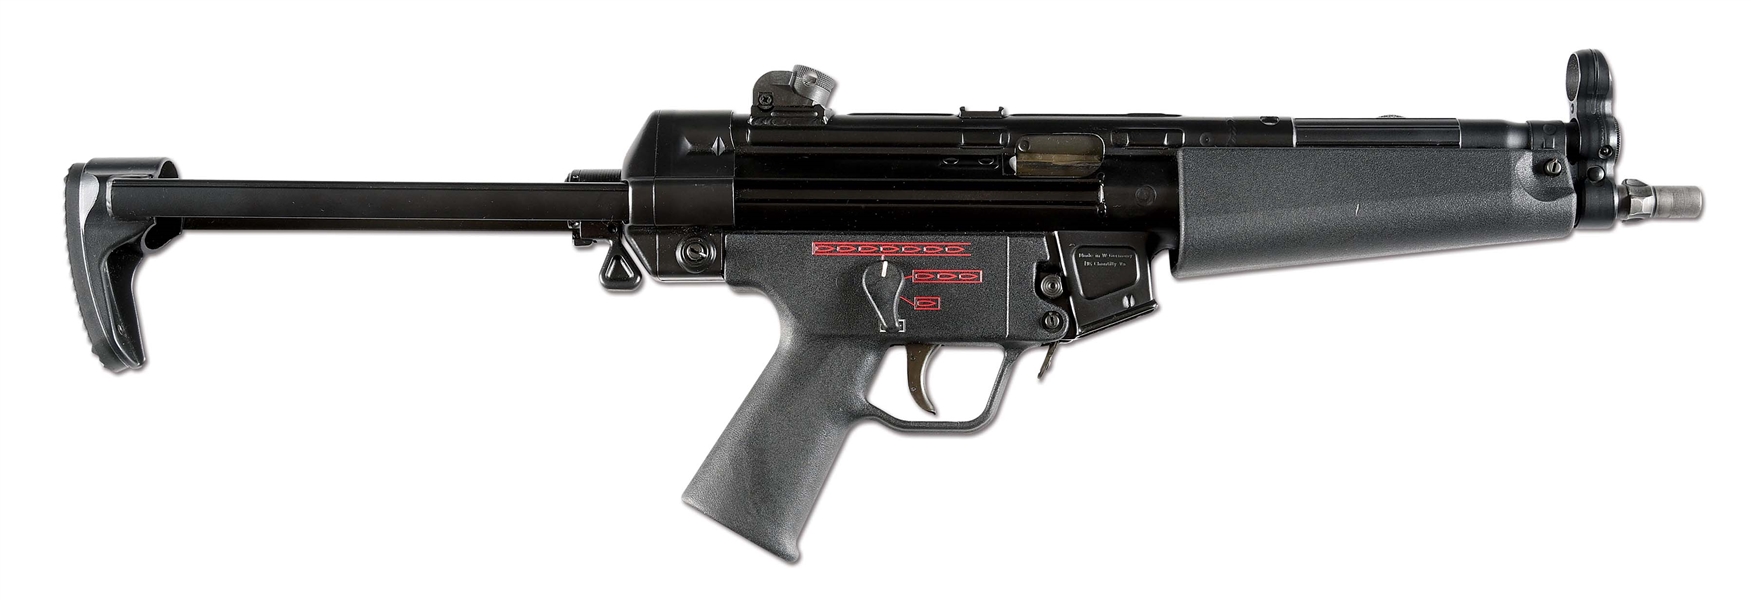 (N) SUPERB HIGH CONDITION 4 POSITION SELECTOR BILLISTICS REGISTERED RECEIVER HK MP5 MACHINE GUN (FULLY TRANSFERABLE). 